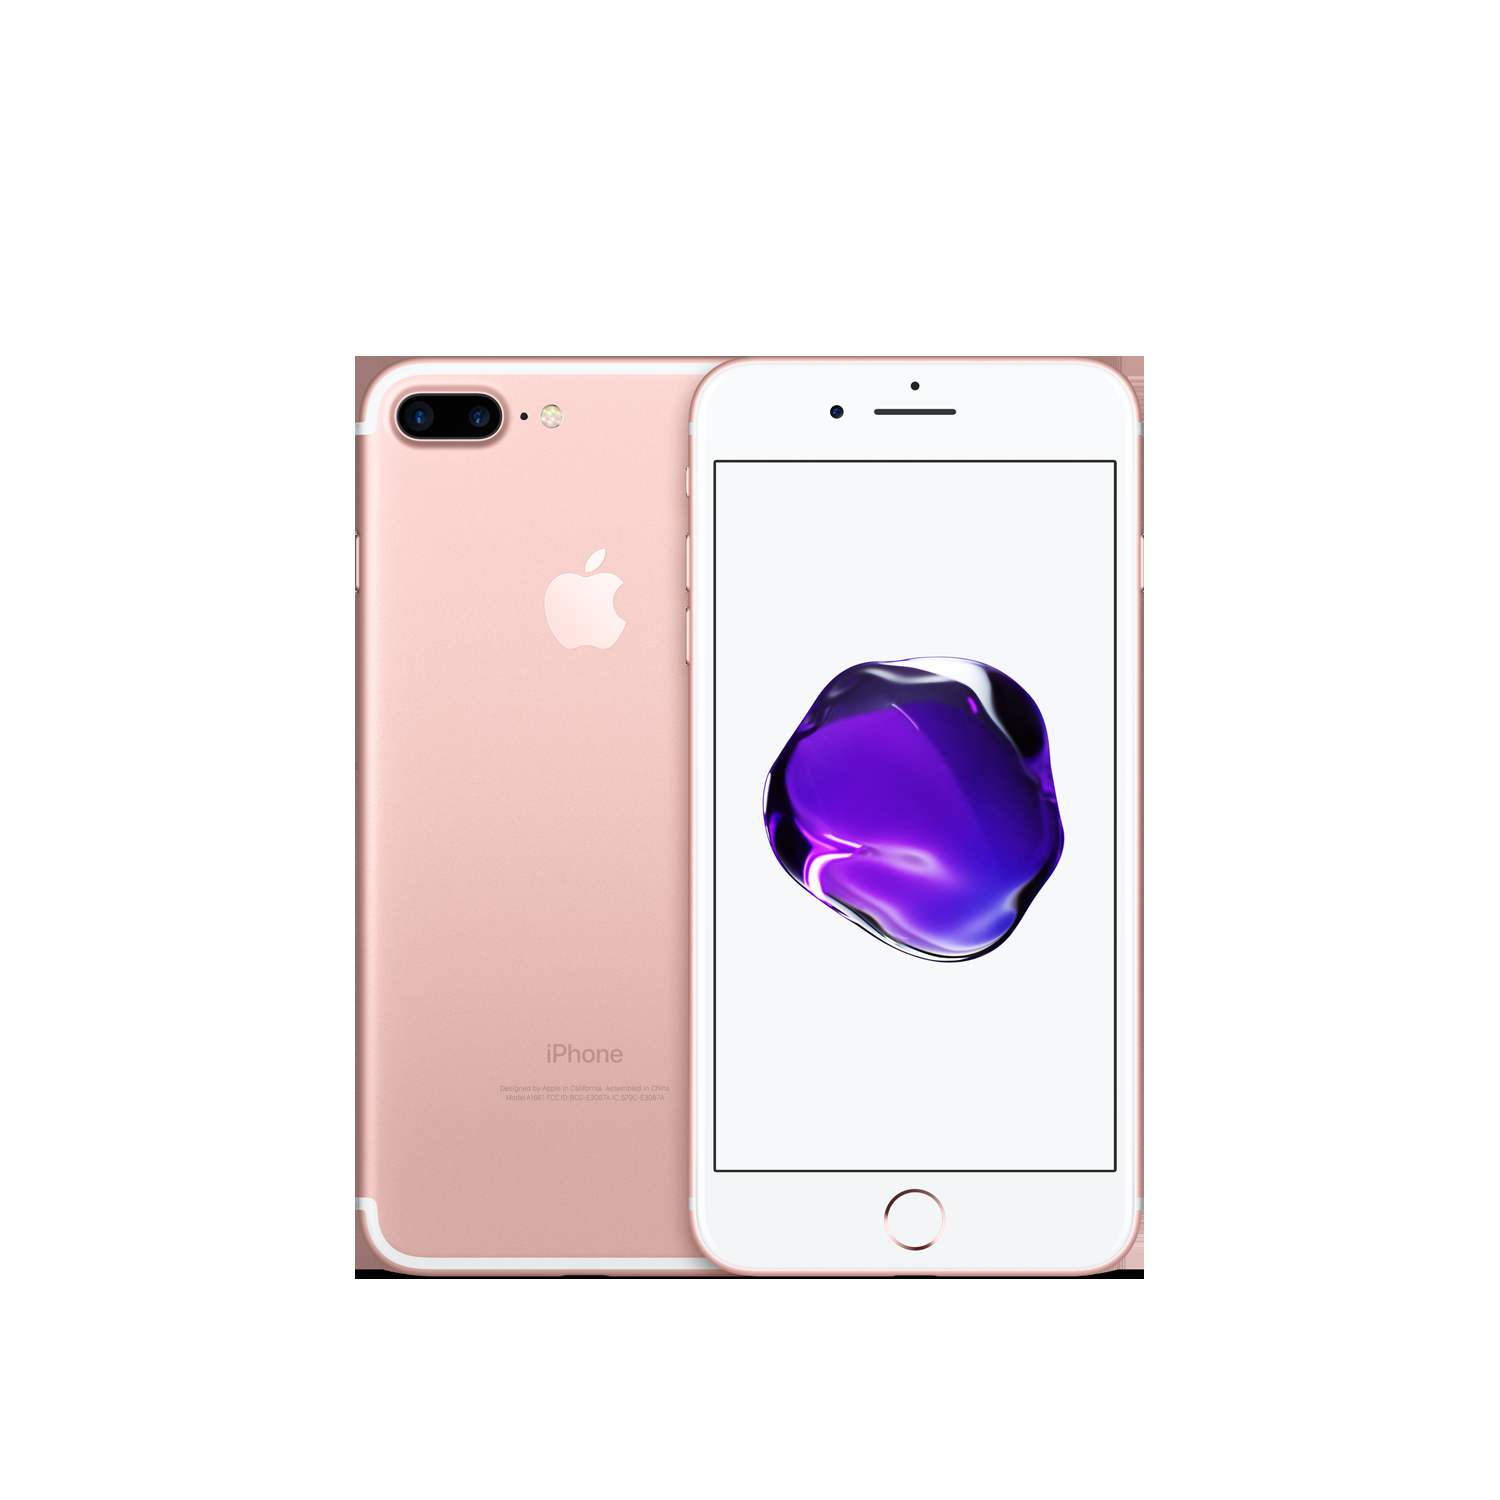 Refurbished (Excellent) - Apple iPhone 7 Plus 32GB Smartphone - Rose Gold - Unlocked - Certified Refurbished